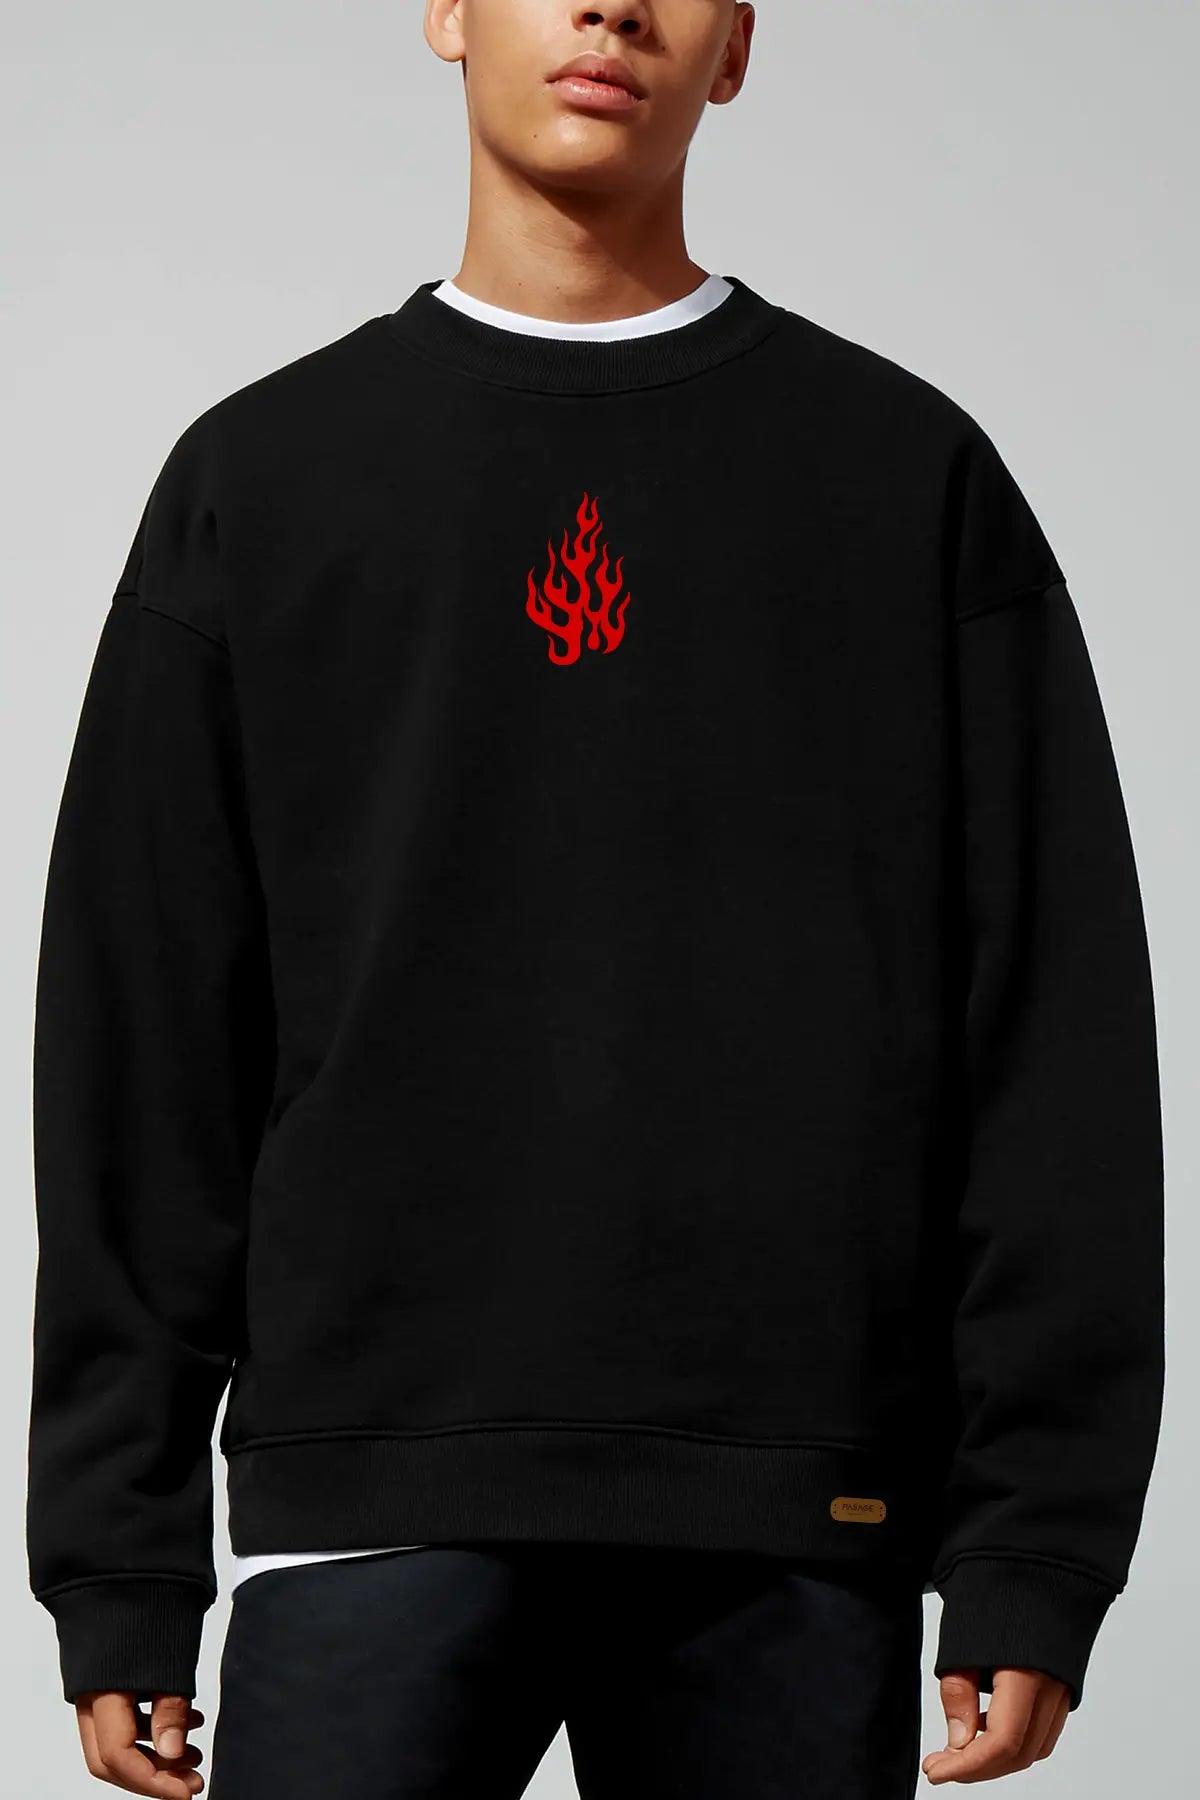 The Devil Oversize Erkek Sweatshirt - PΛSΛGE